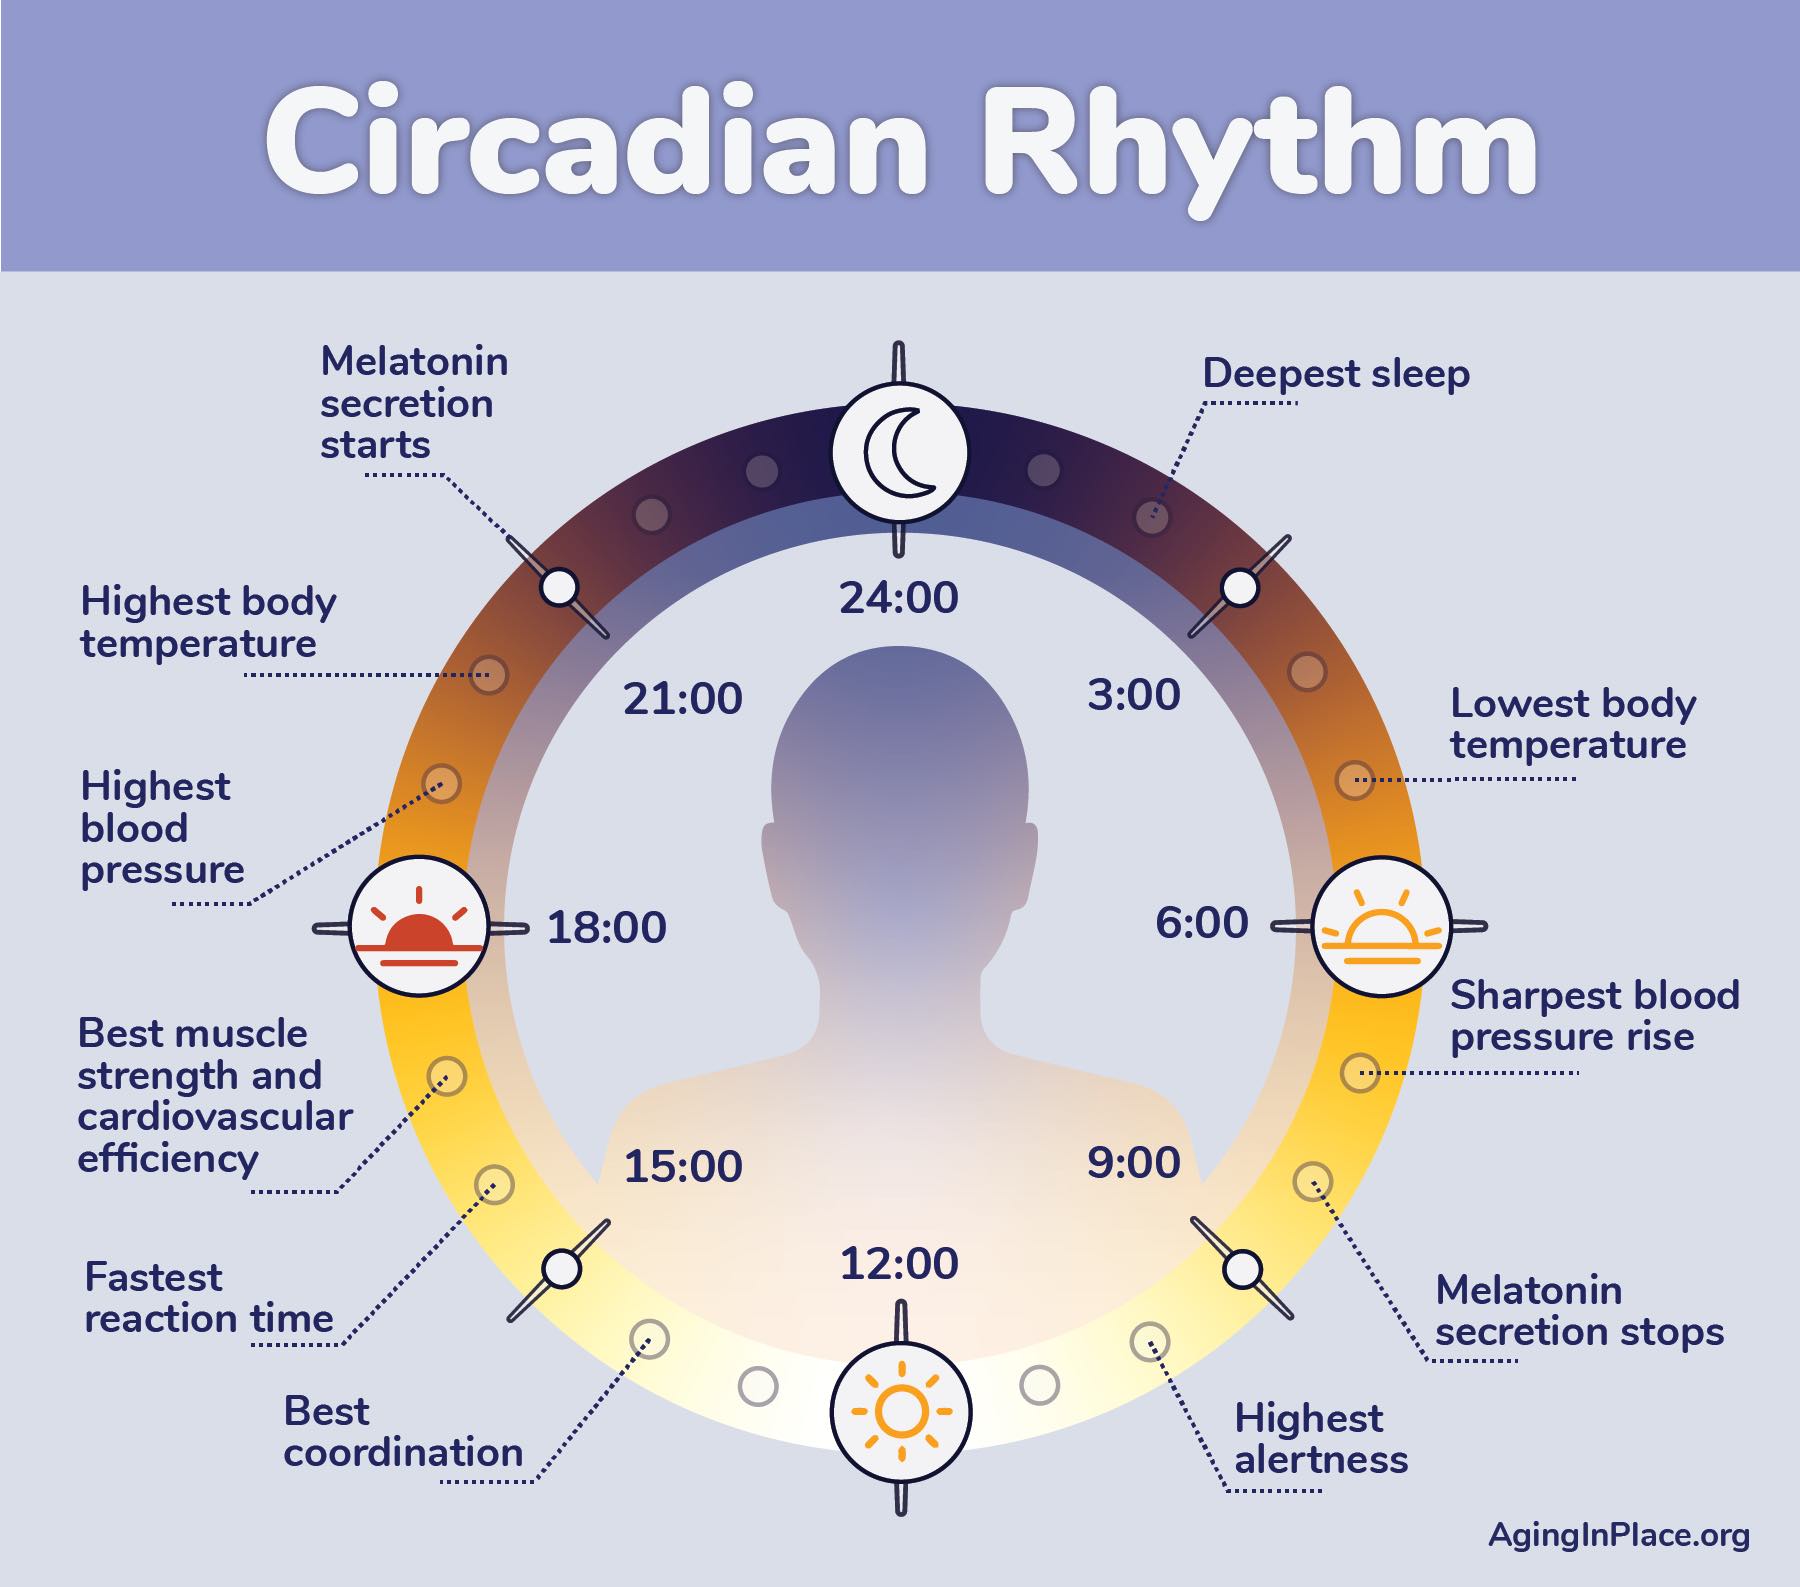 Circadian rhythm is the sleep-wake pattern that regulates our sleep